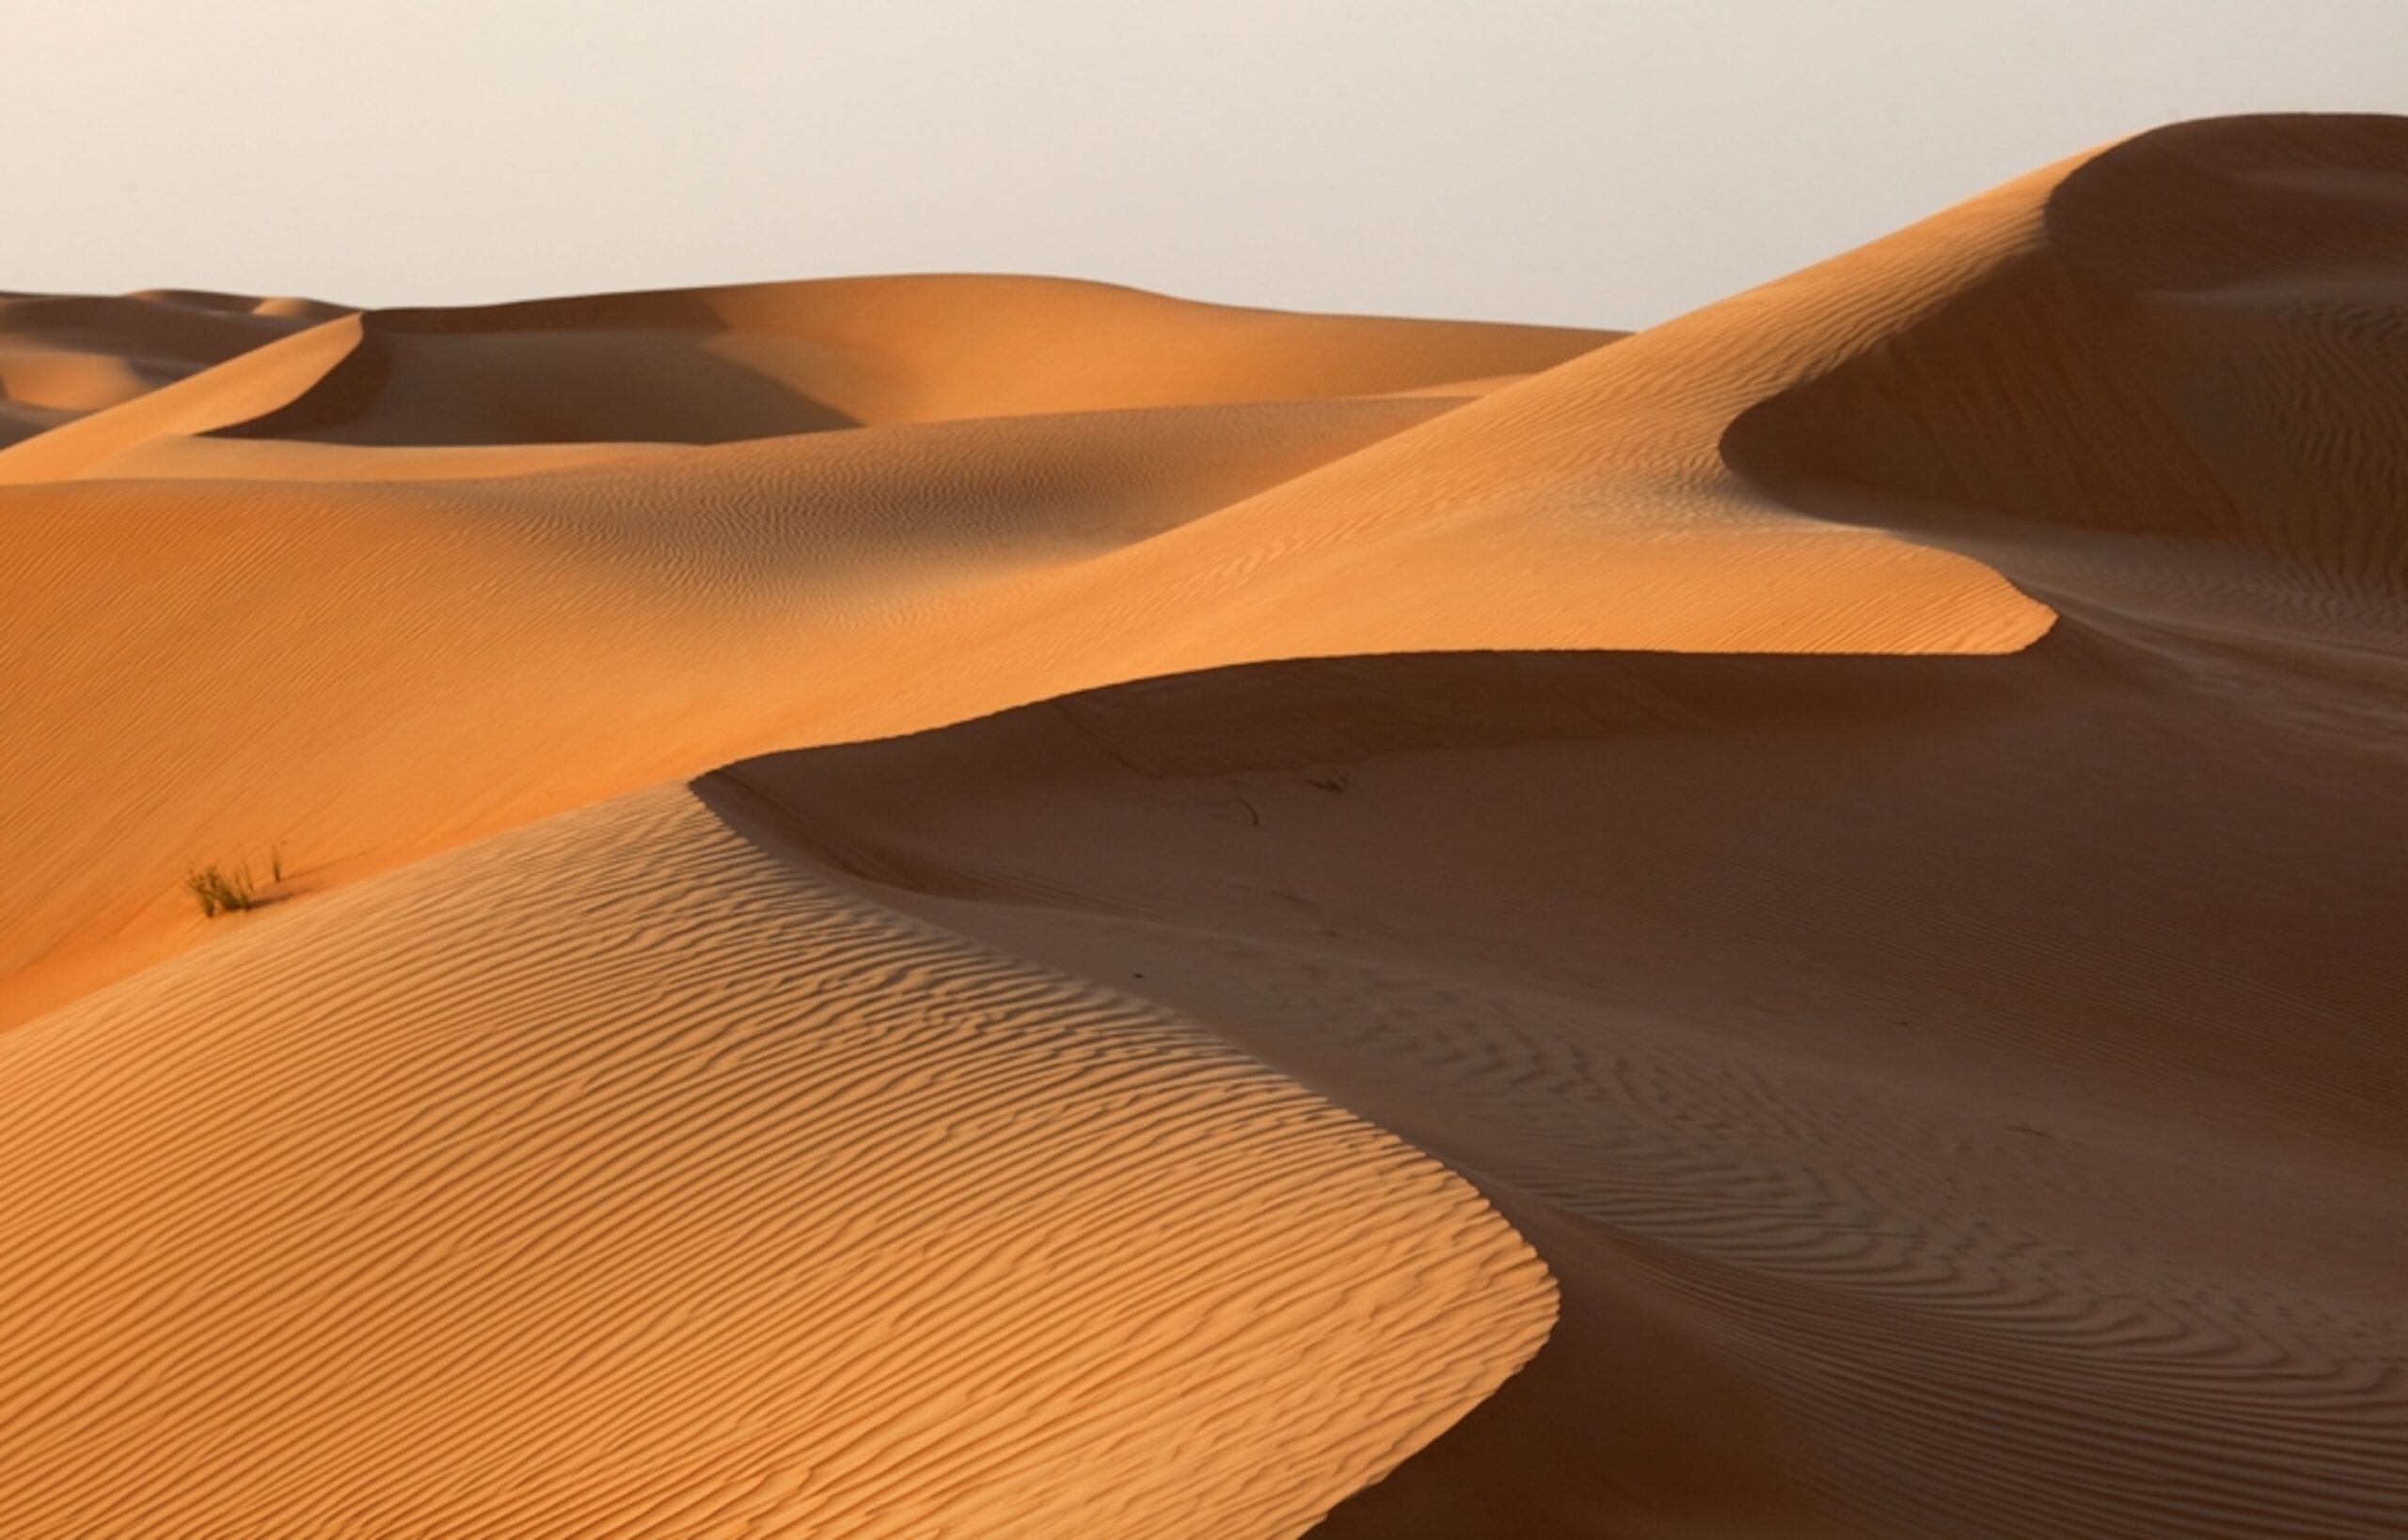 Abu Dhabi’s Desert Rose: An In-Depth Guide To The Empty Quarter